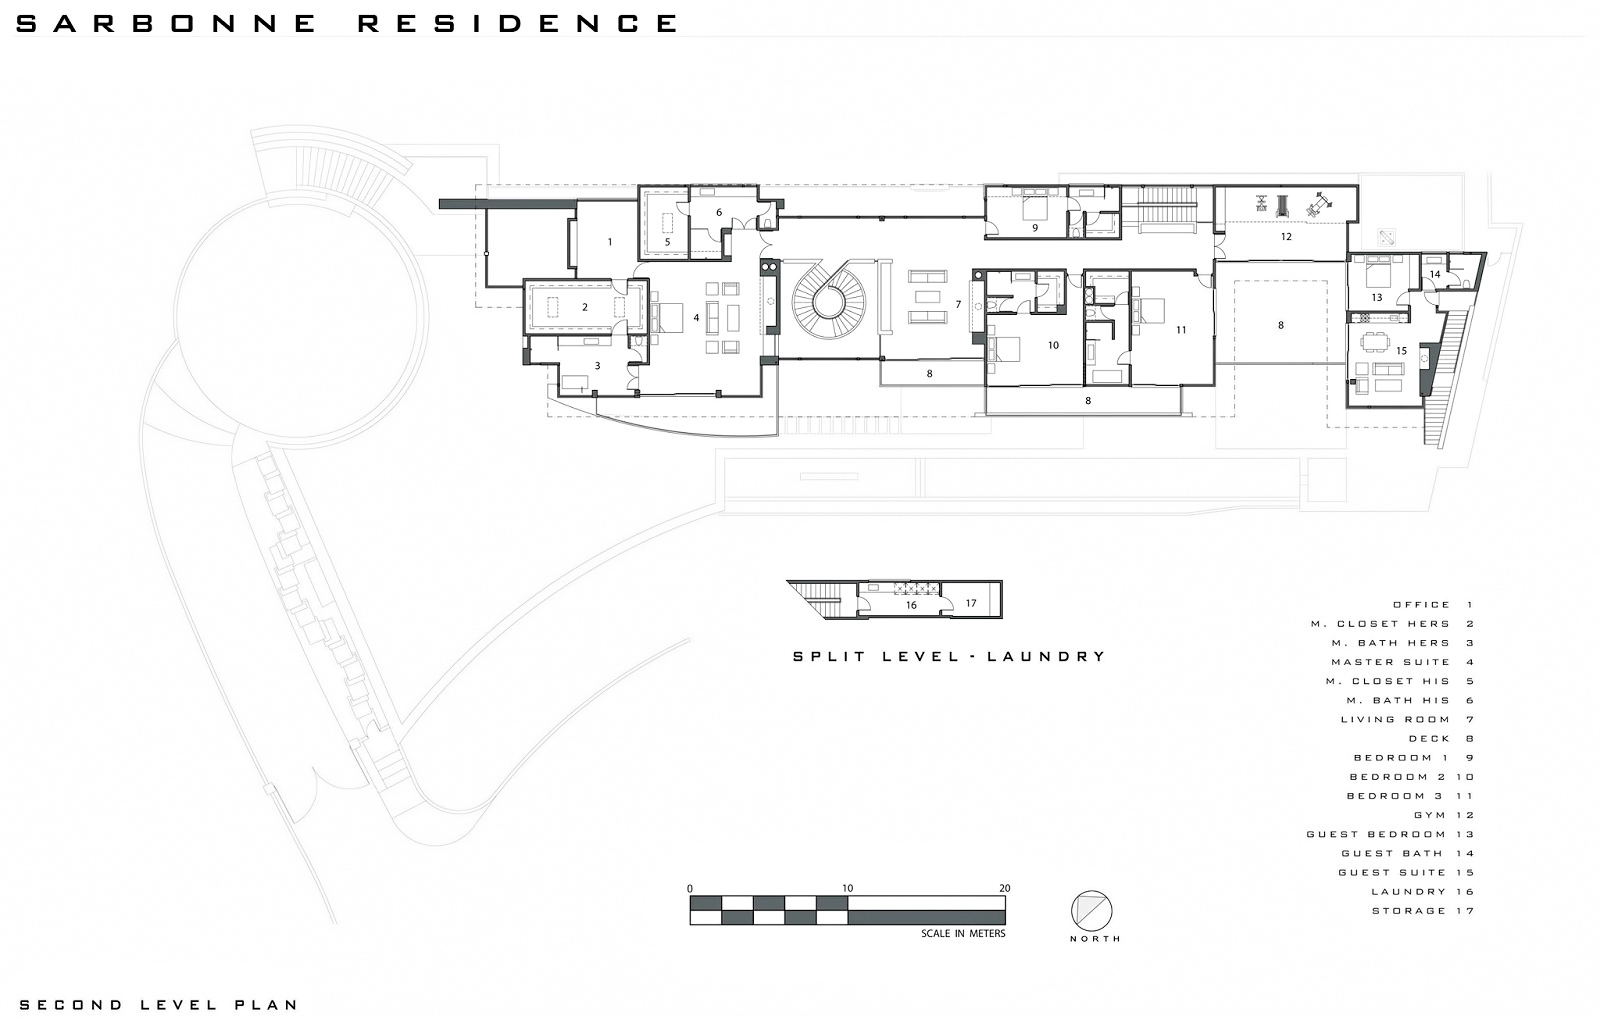 Second Level Floor Plan Bel Air Residence 755 Sarbonne